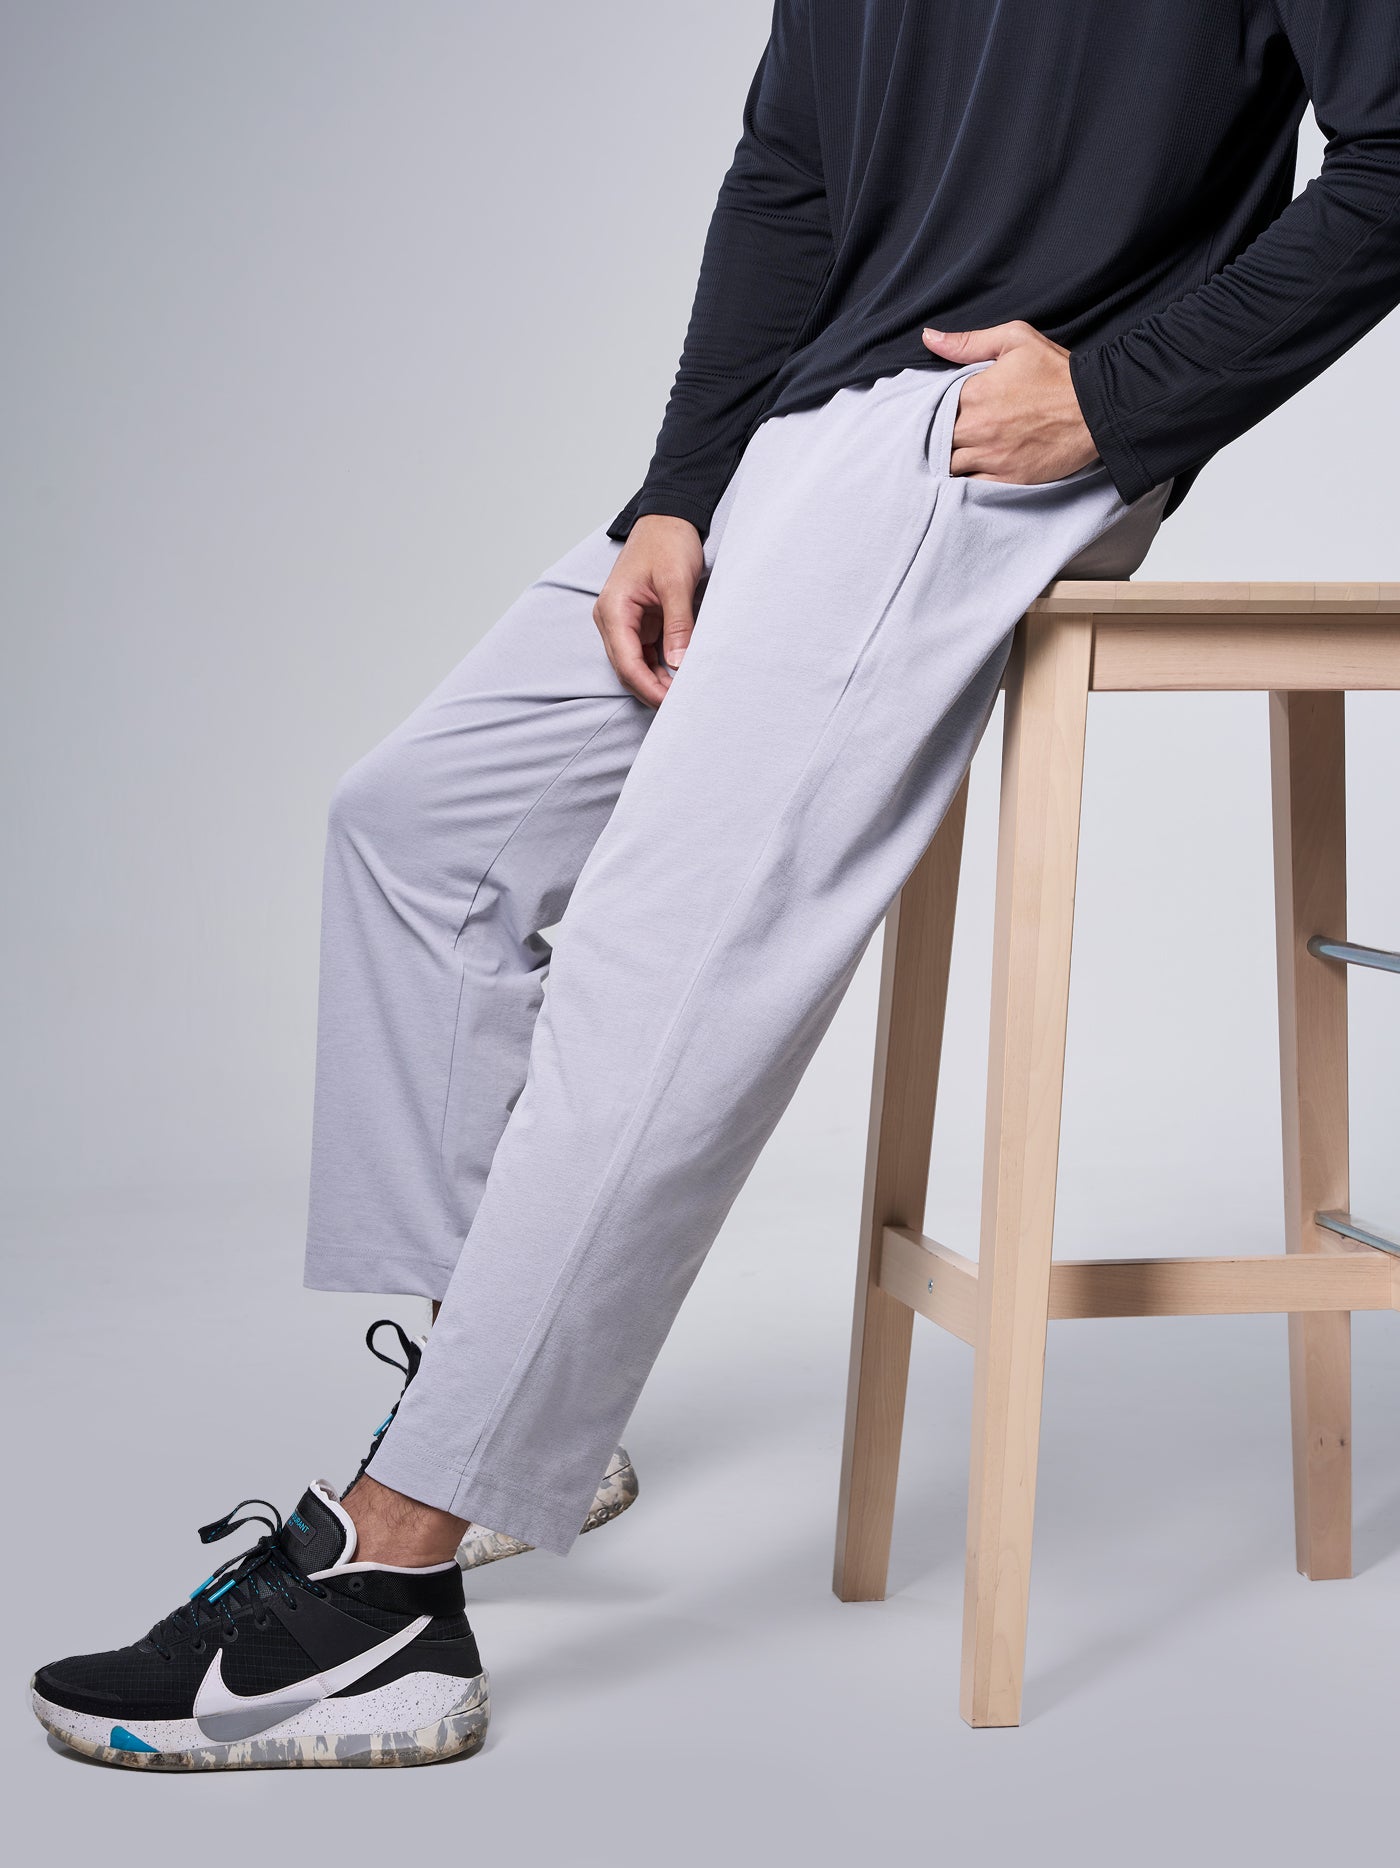 How to Wear the Athleta Brooklyn Ankle Pant | POPSUGAR Fashion